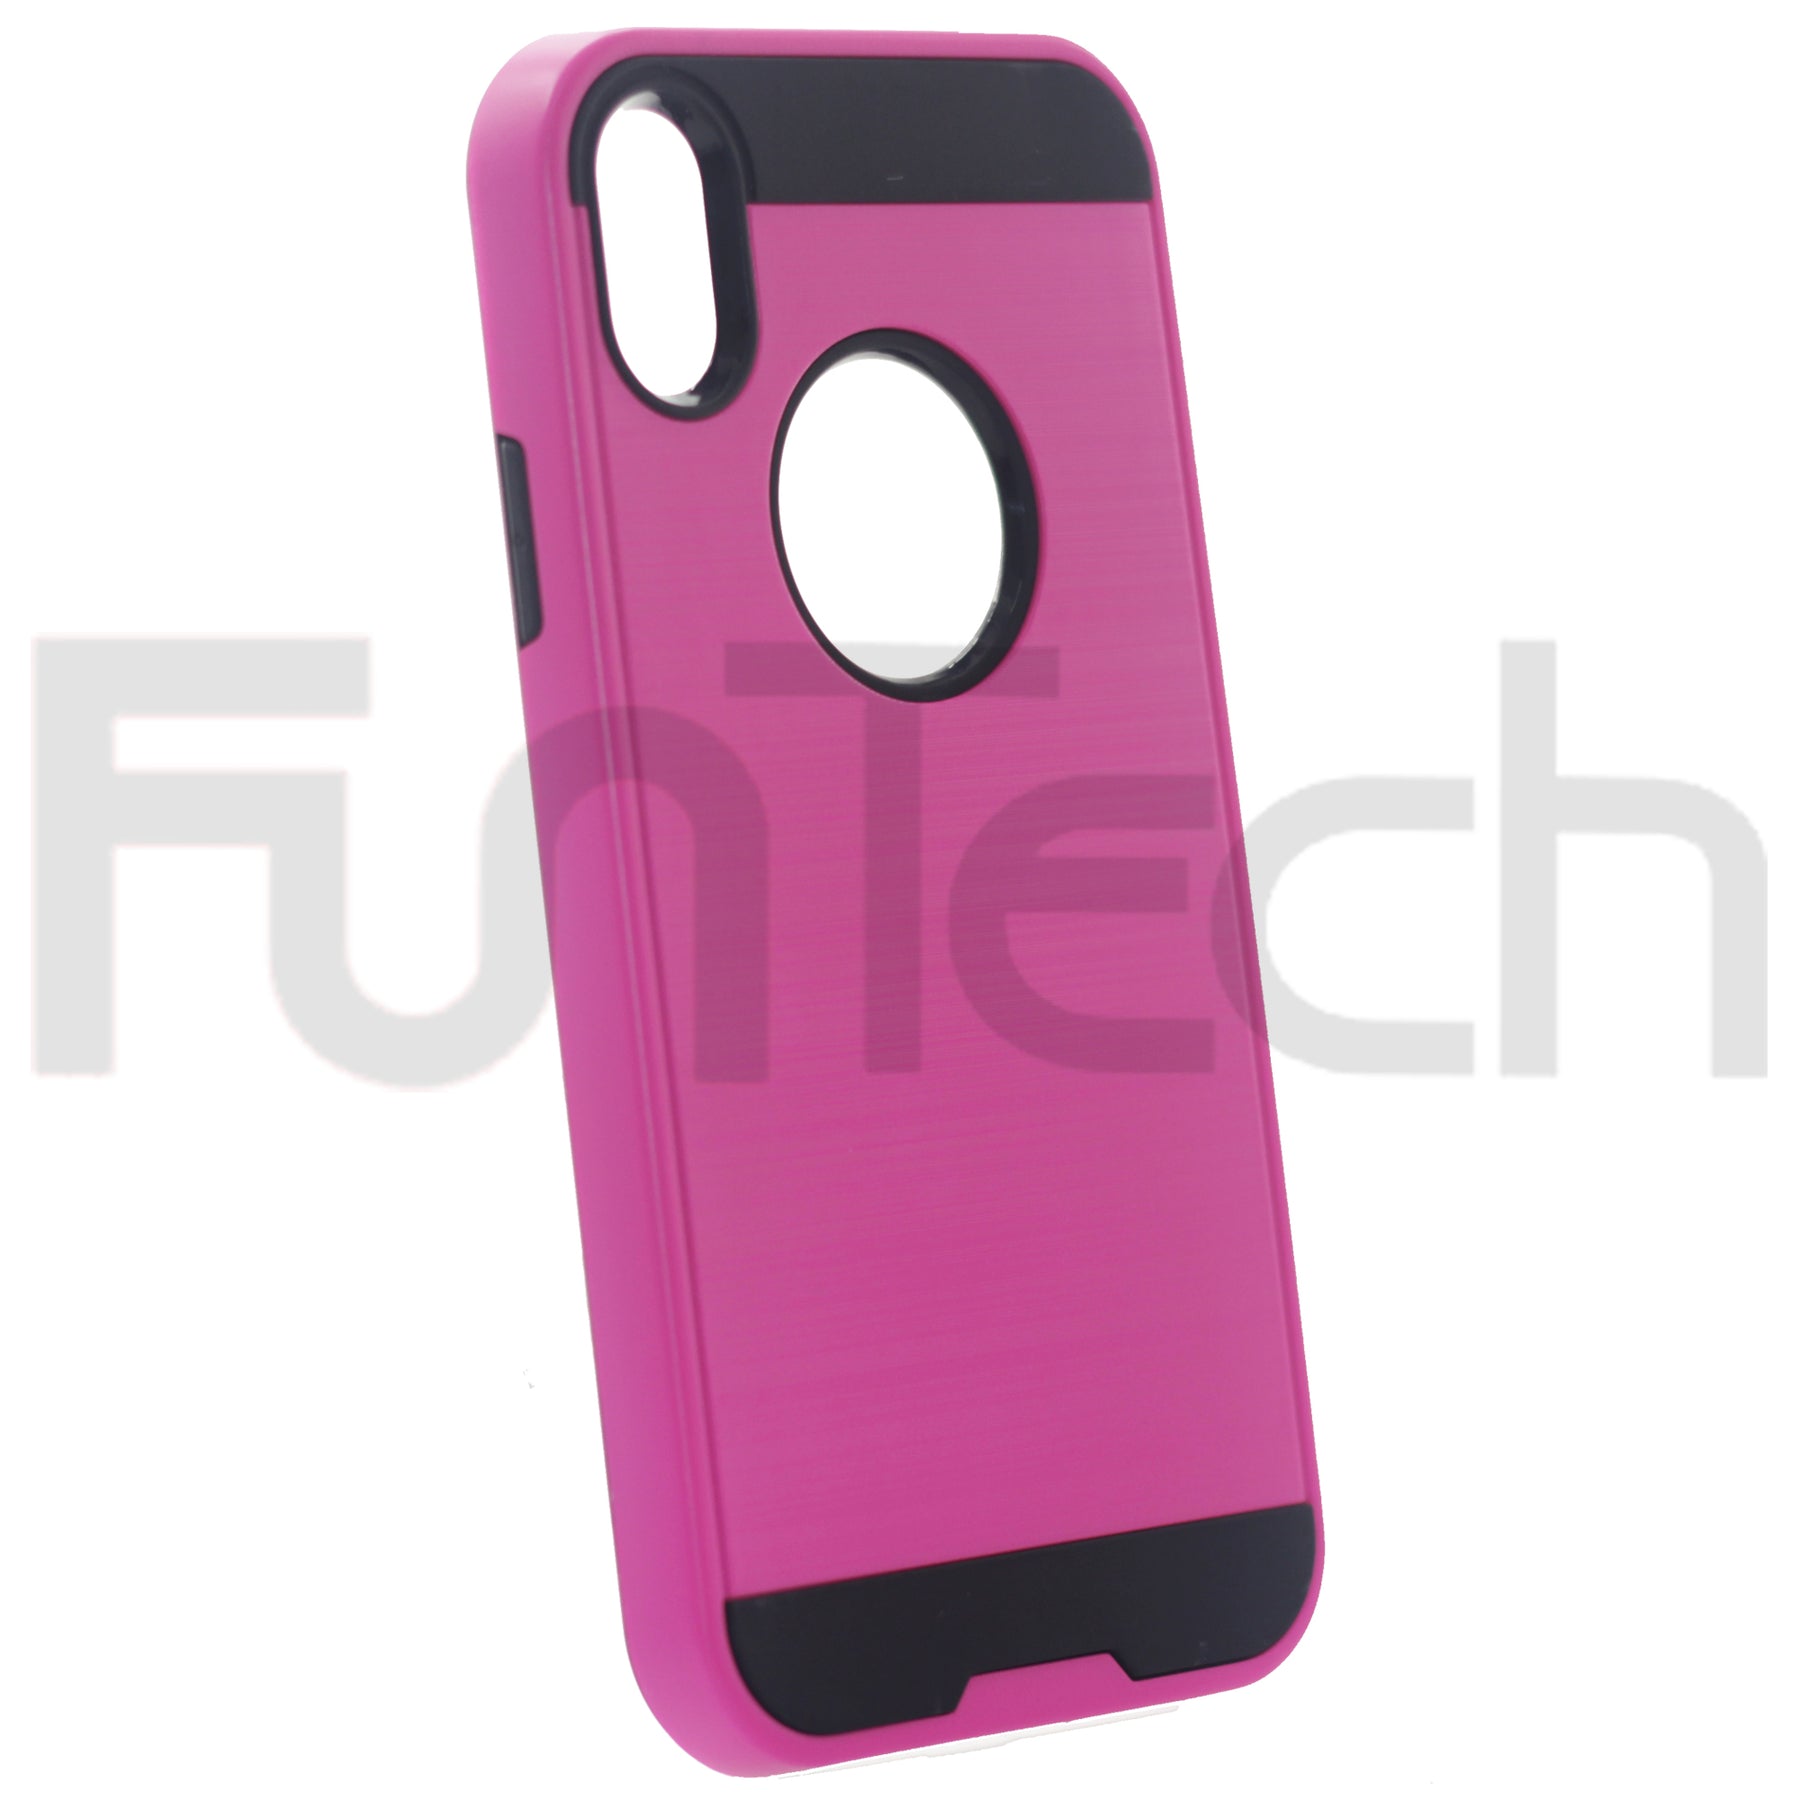 Apple iPhone XR Slim Armor Case Pink.